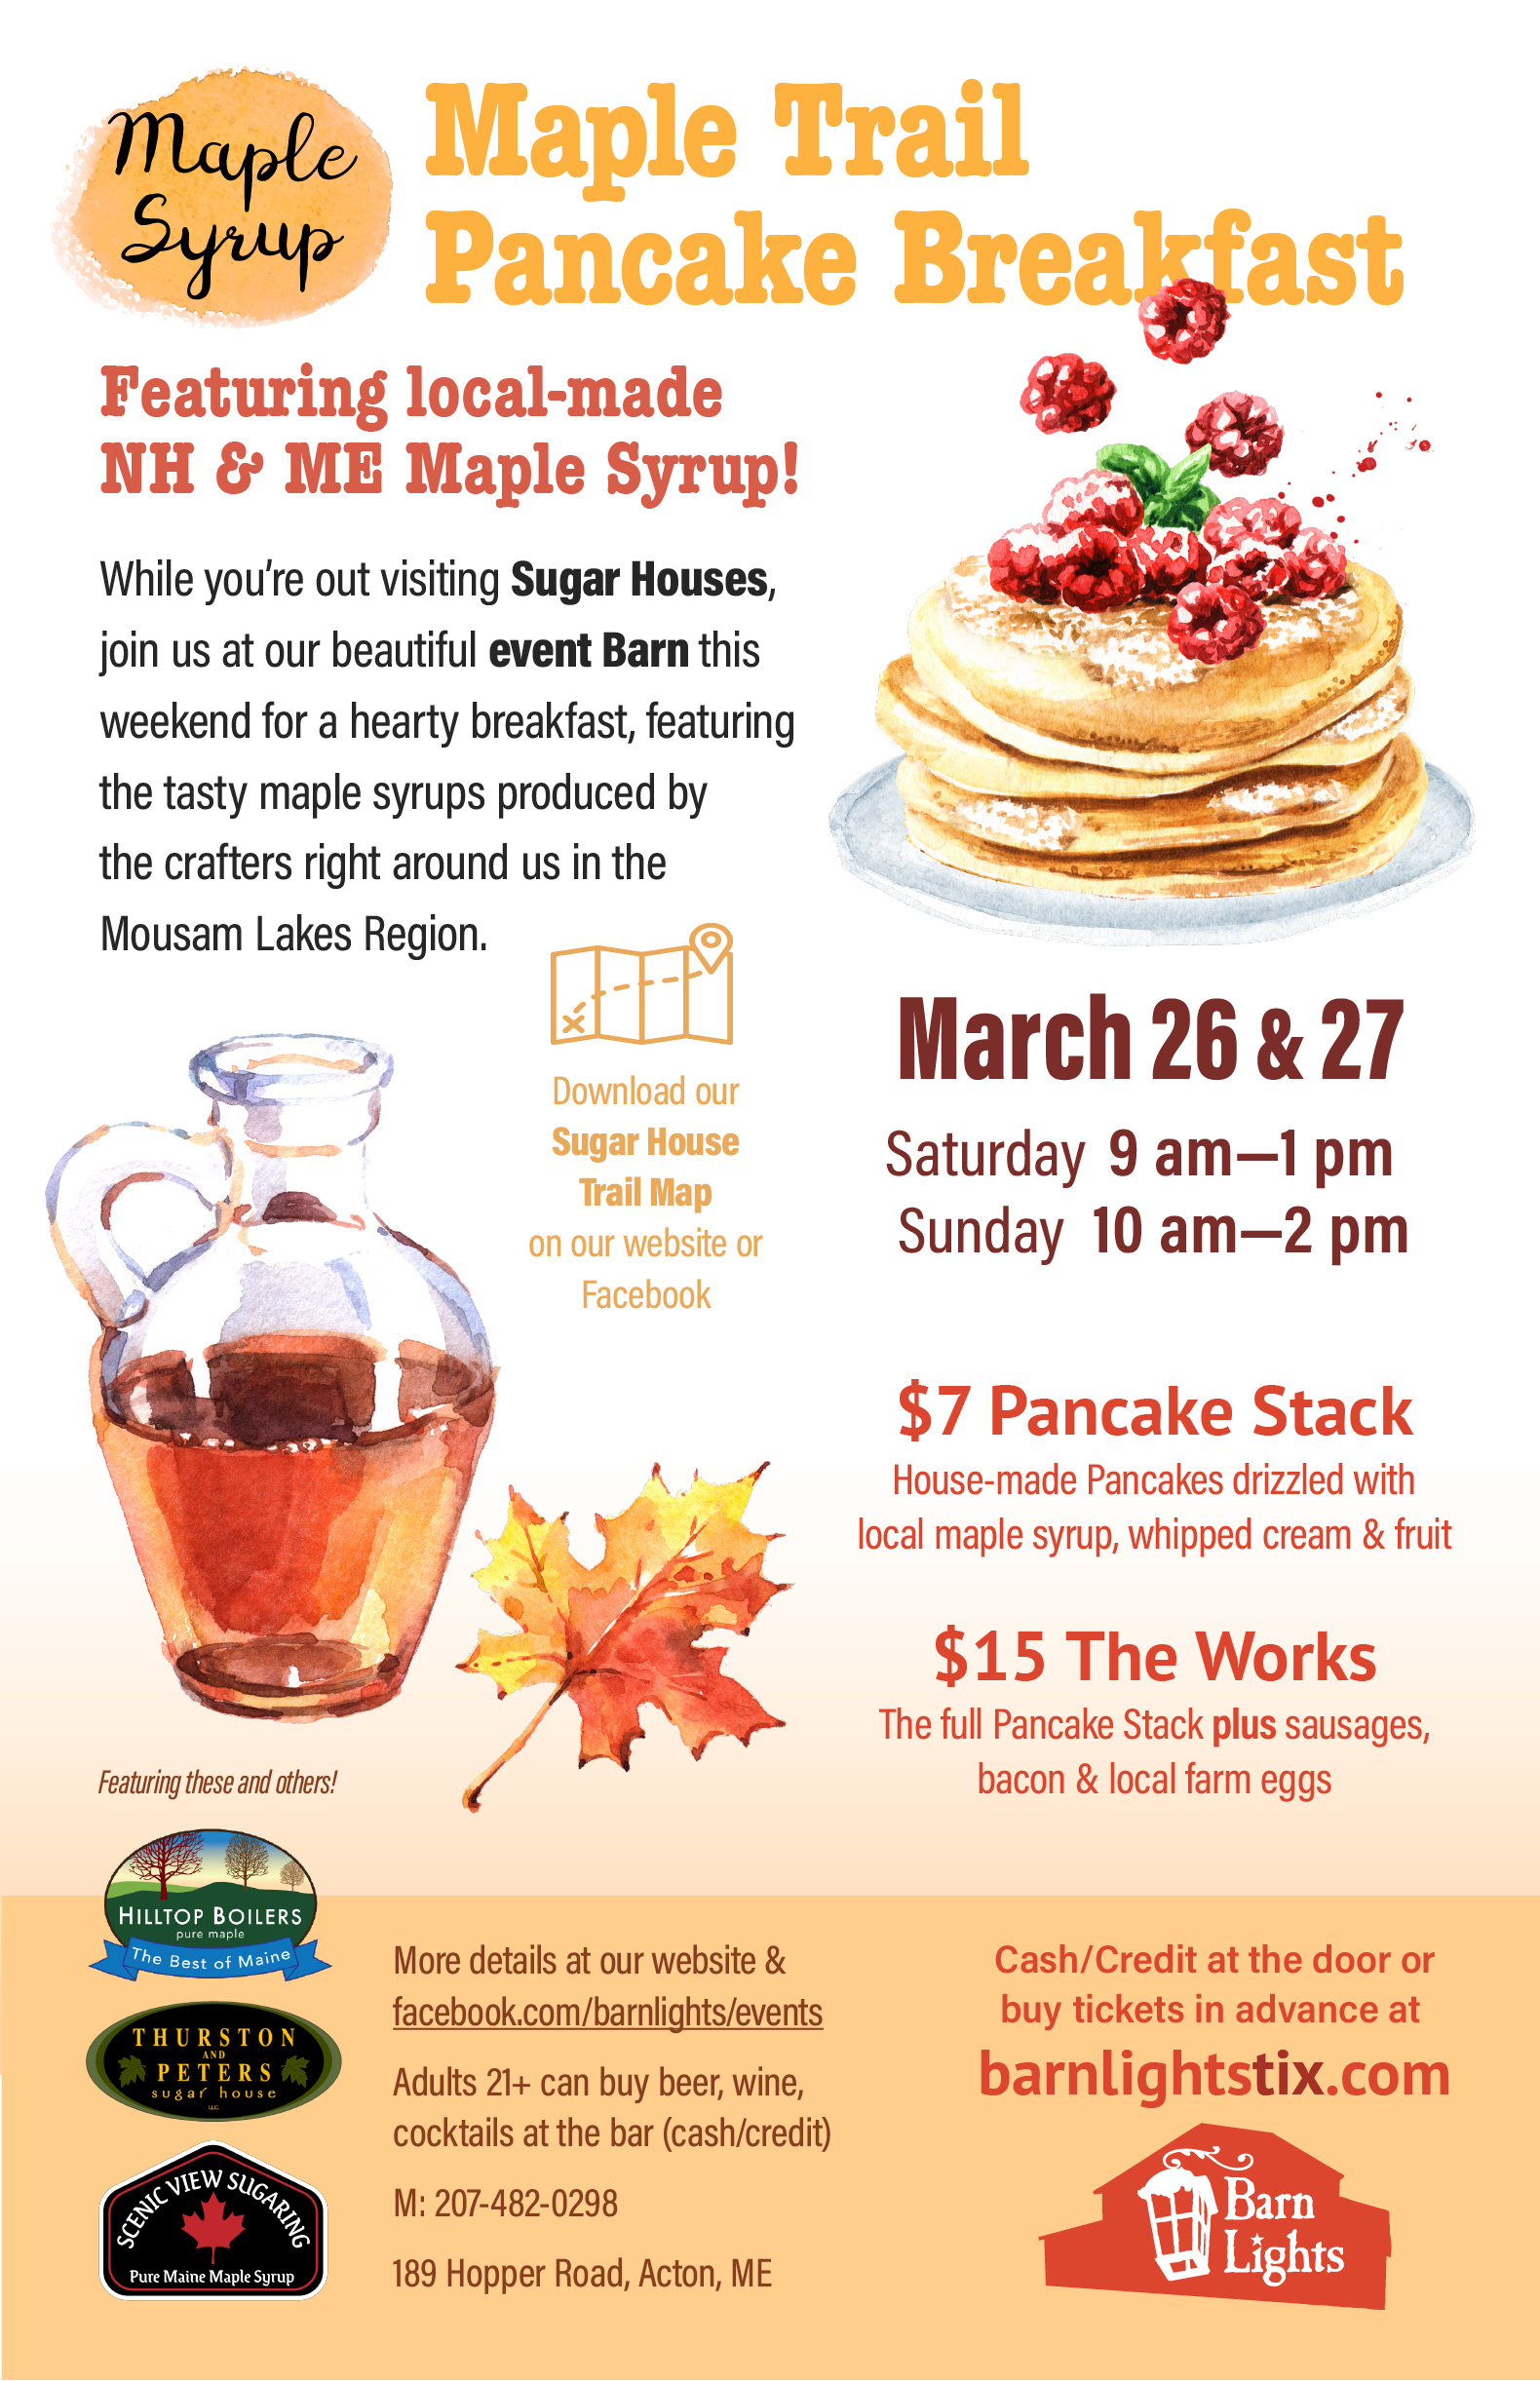 Maple Trail Pancake Breakfast at Barn Lights